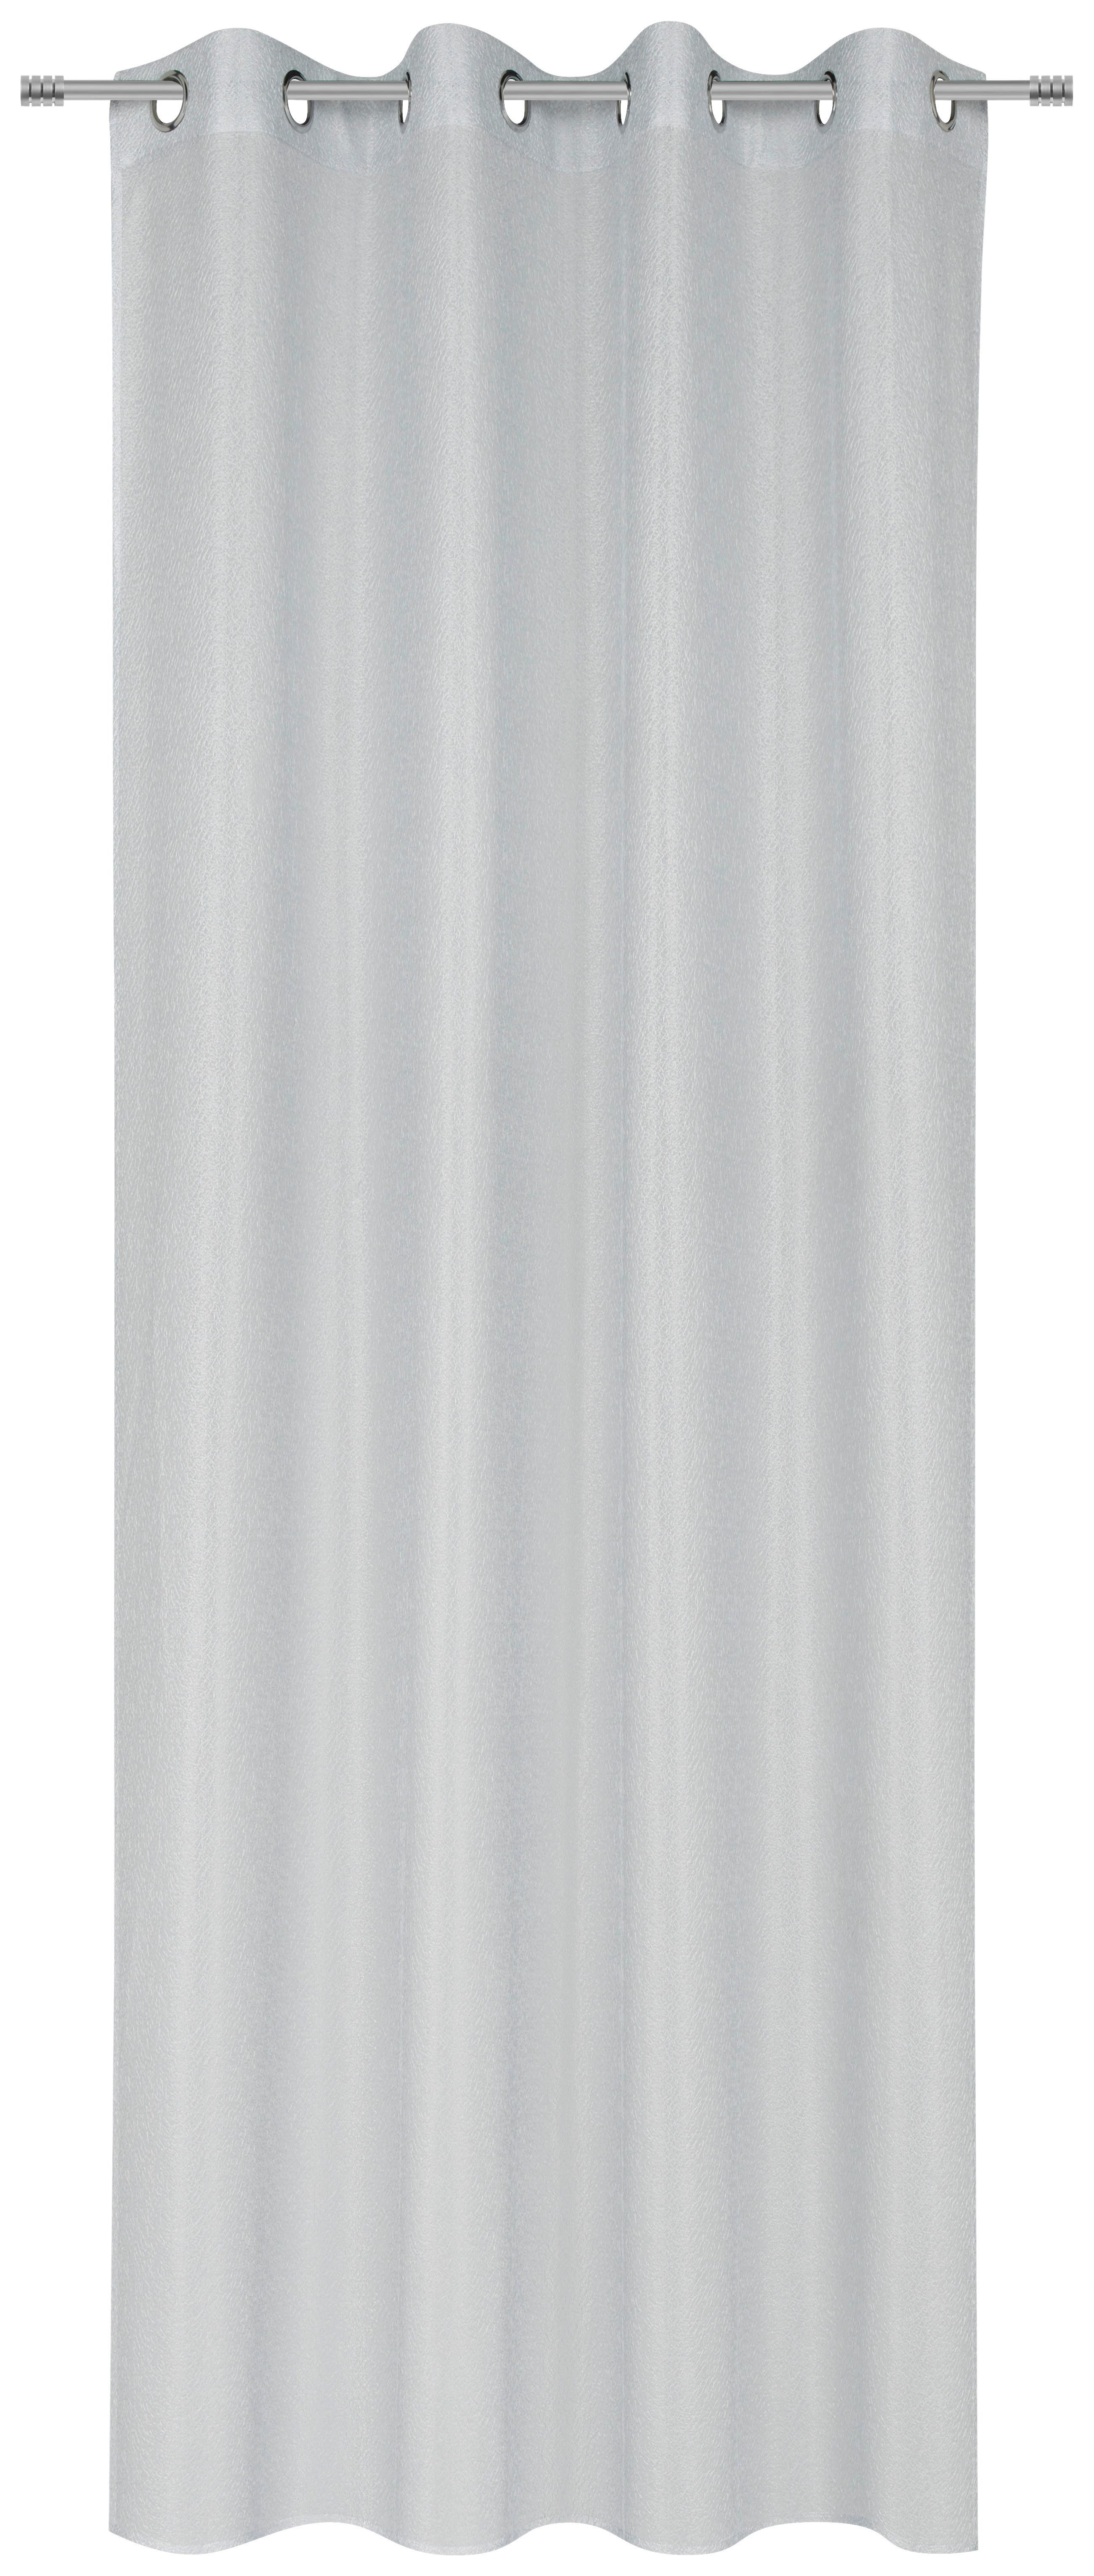 Zavjesa S Ringovima Iceland - srebrne boje, tekstil (140/245cm) - Modern Living